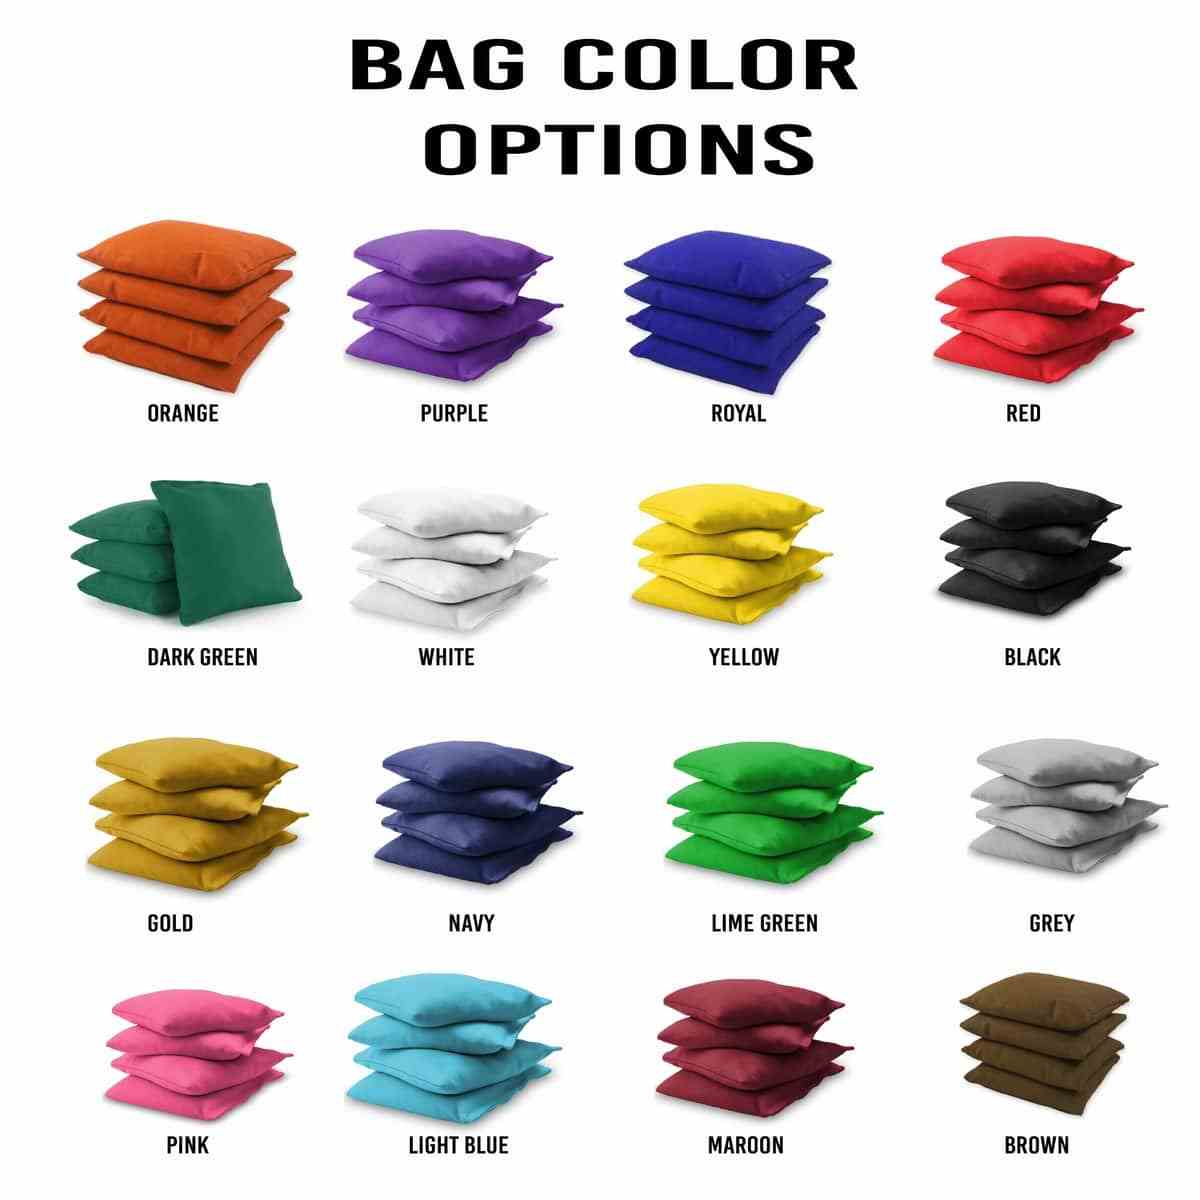 Louisiana State 2x4 bag colors